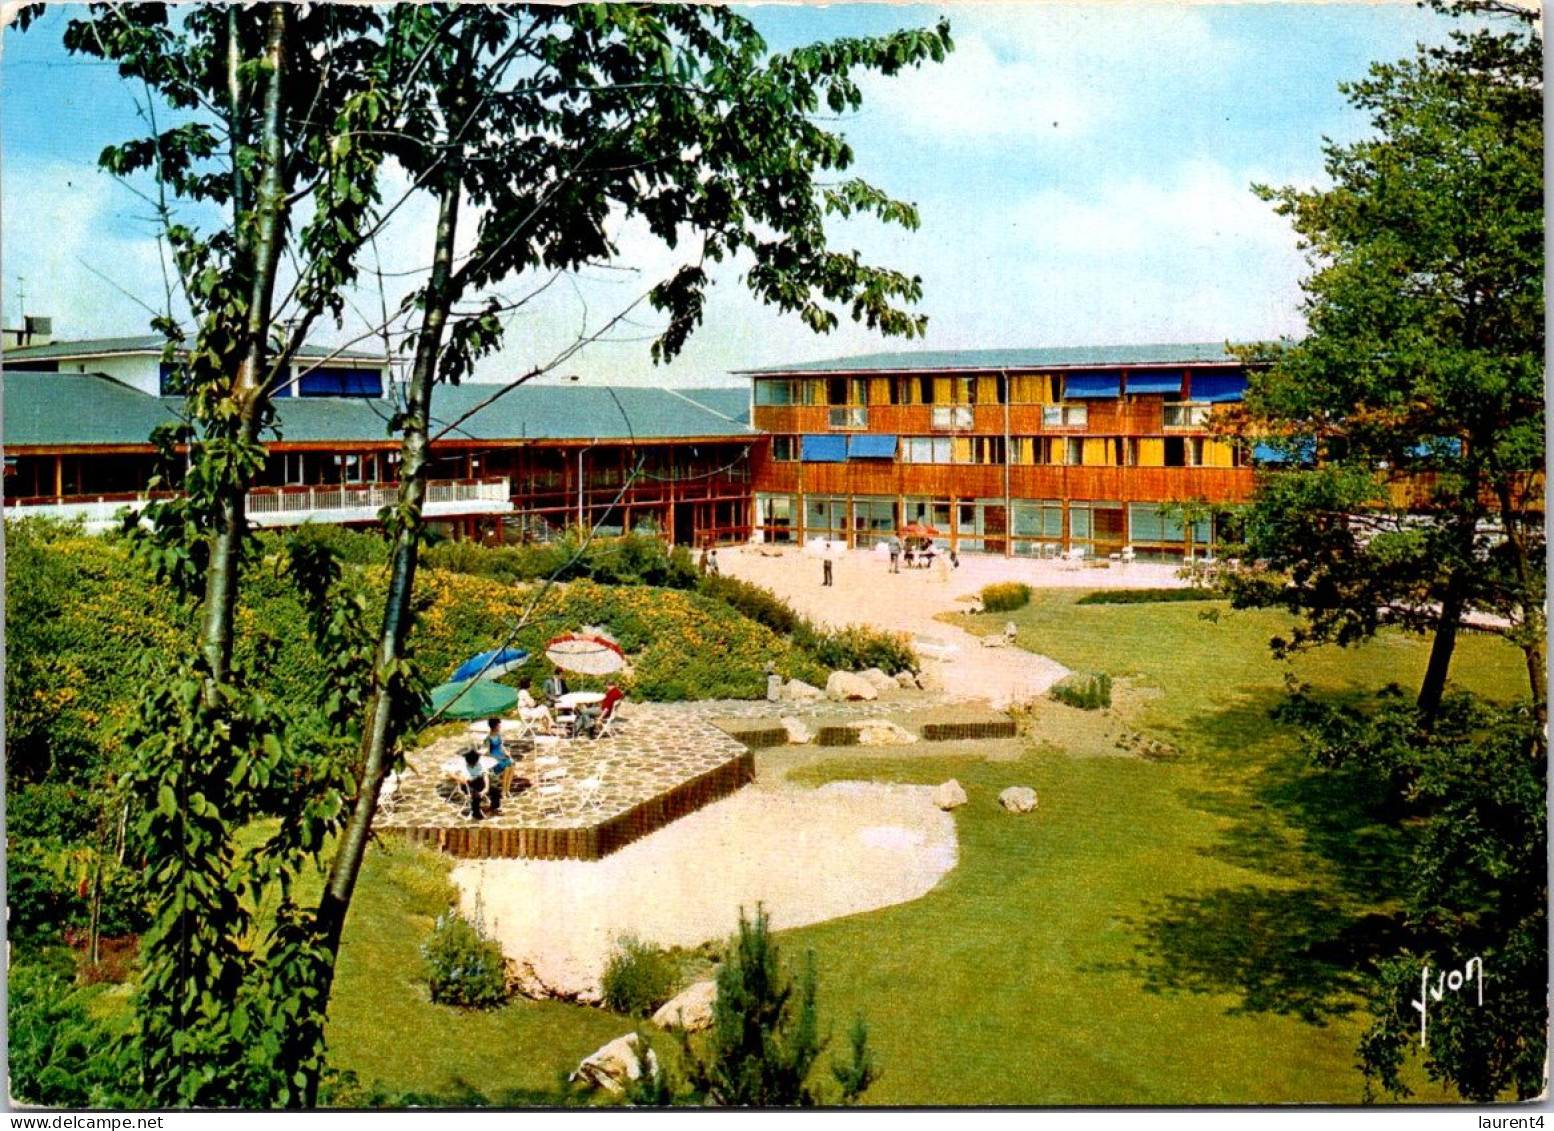 19-12-2023 (2 W 31) FRANCE - Village Vacance De Dourdan (2 Postcards) - Hotels & Restaurants